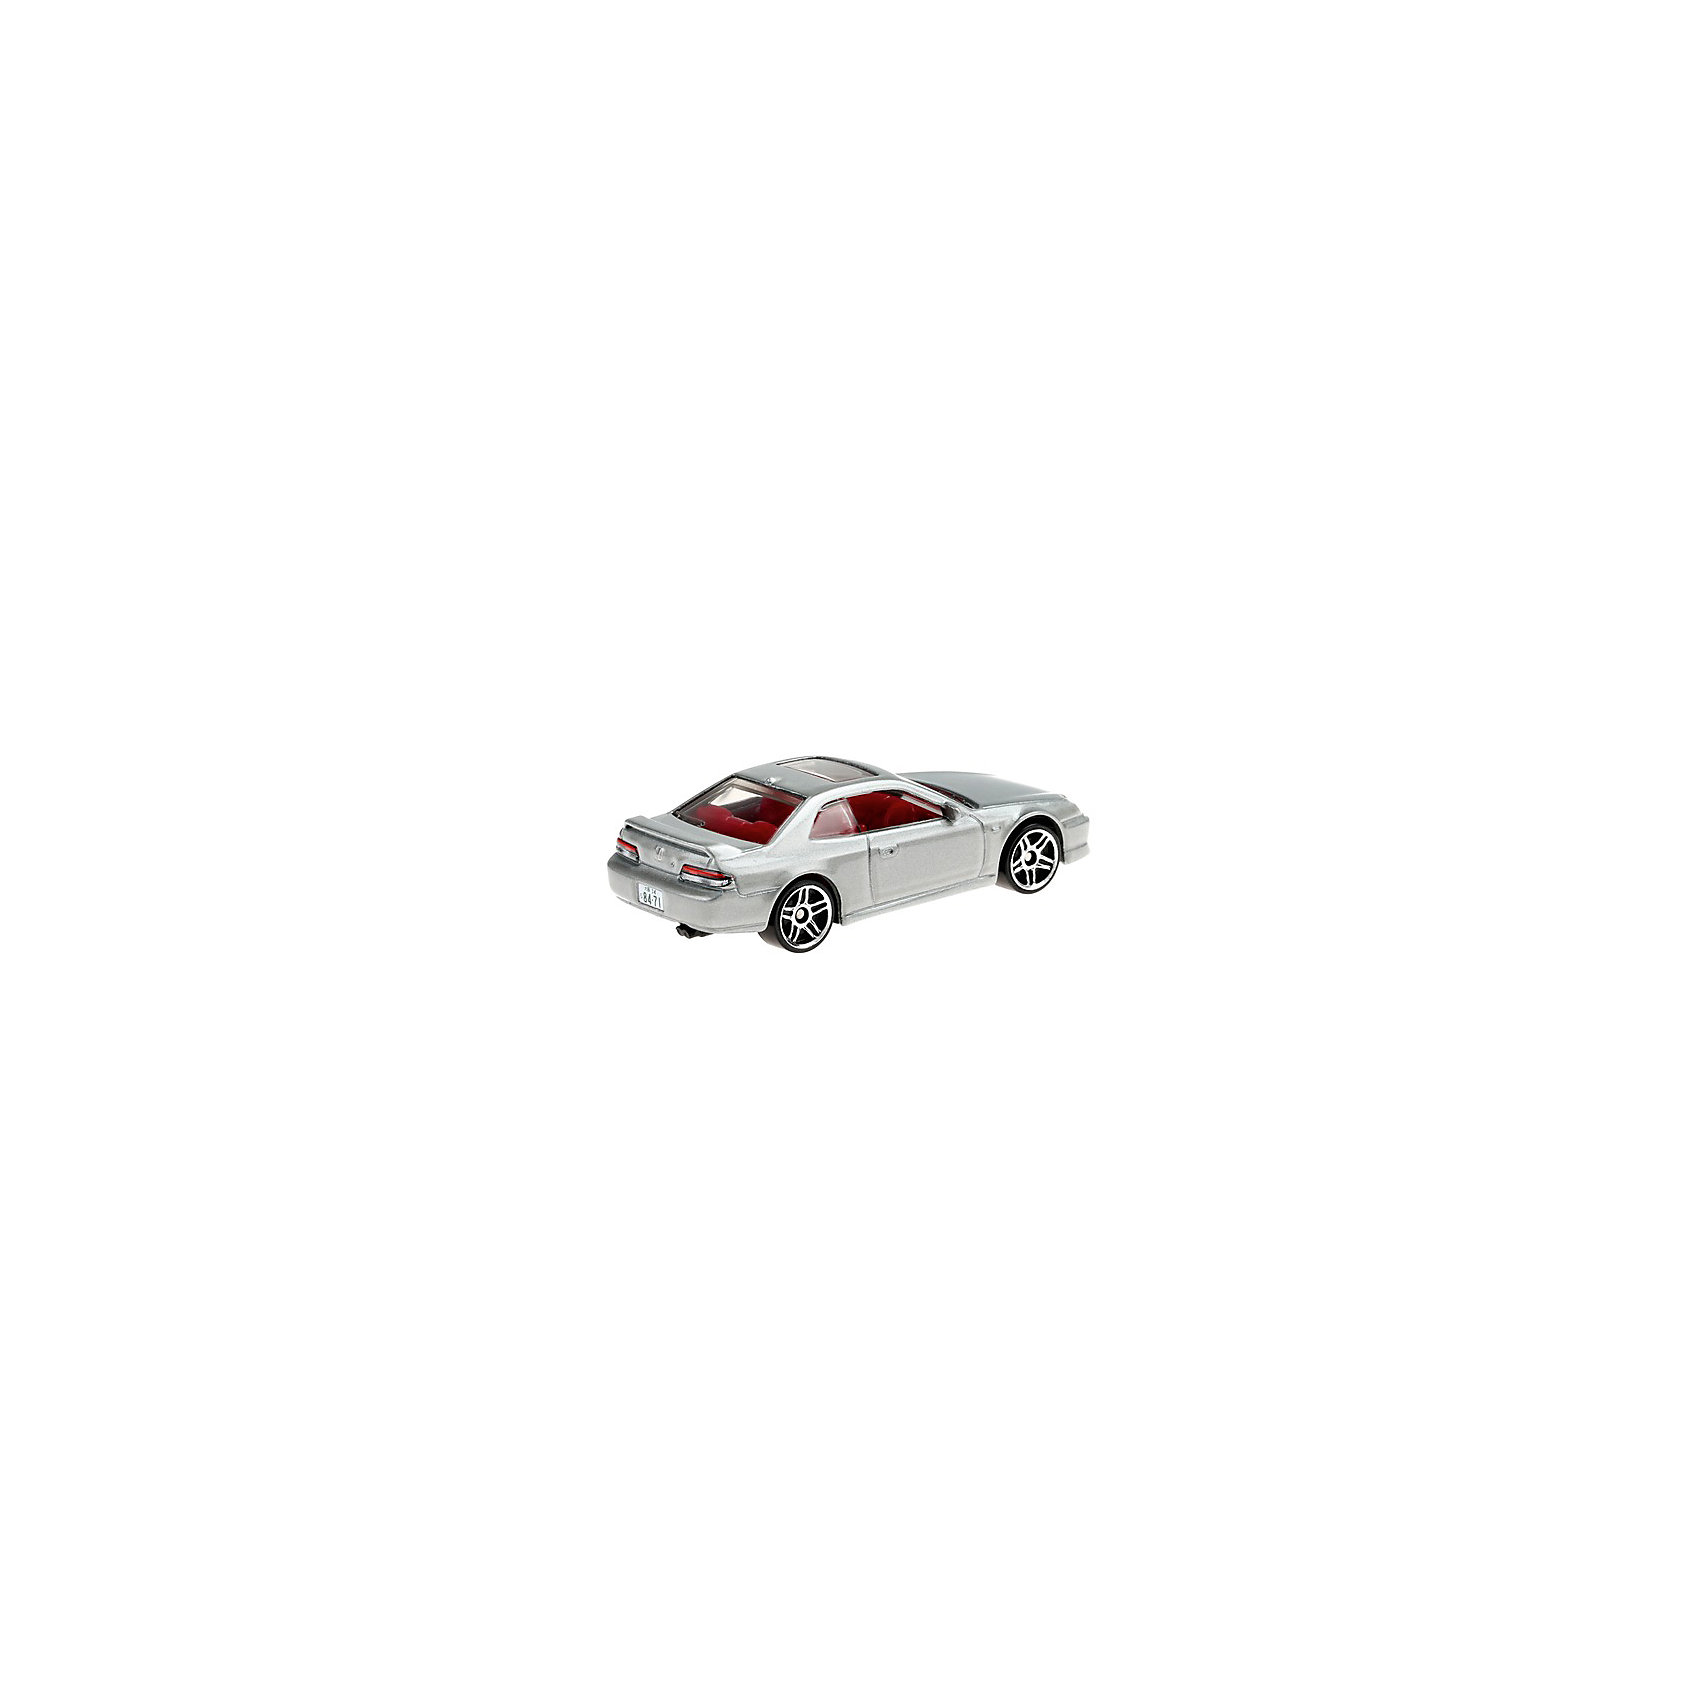 Базовая машинка Hot Wheels 98 Honda Prelude Mattel 16467082